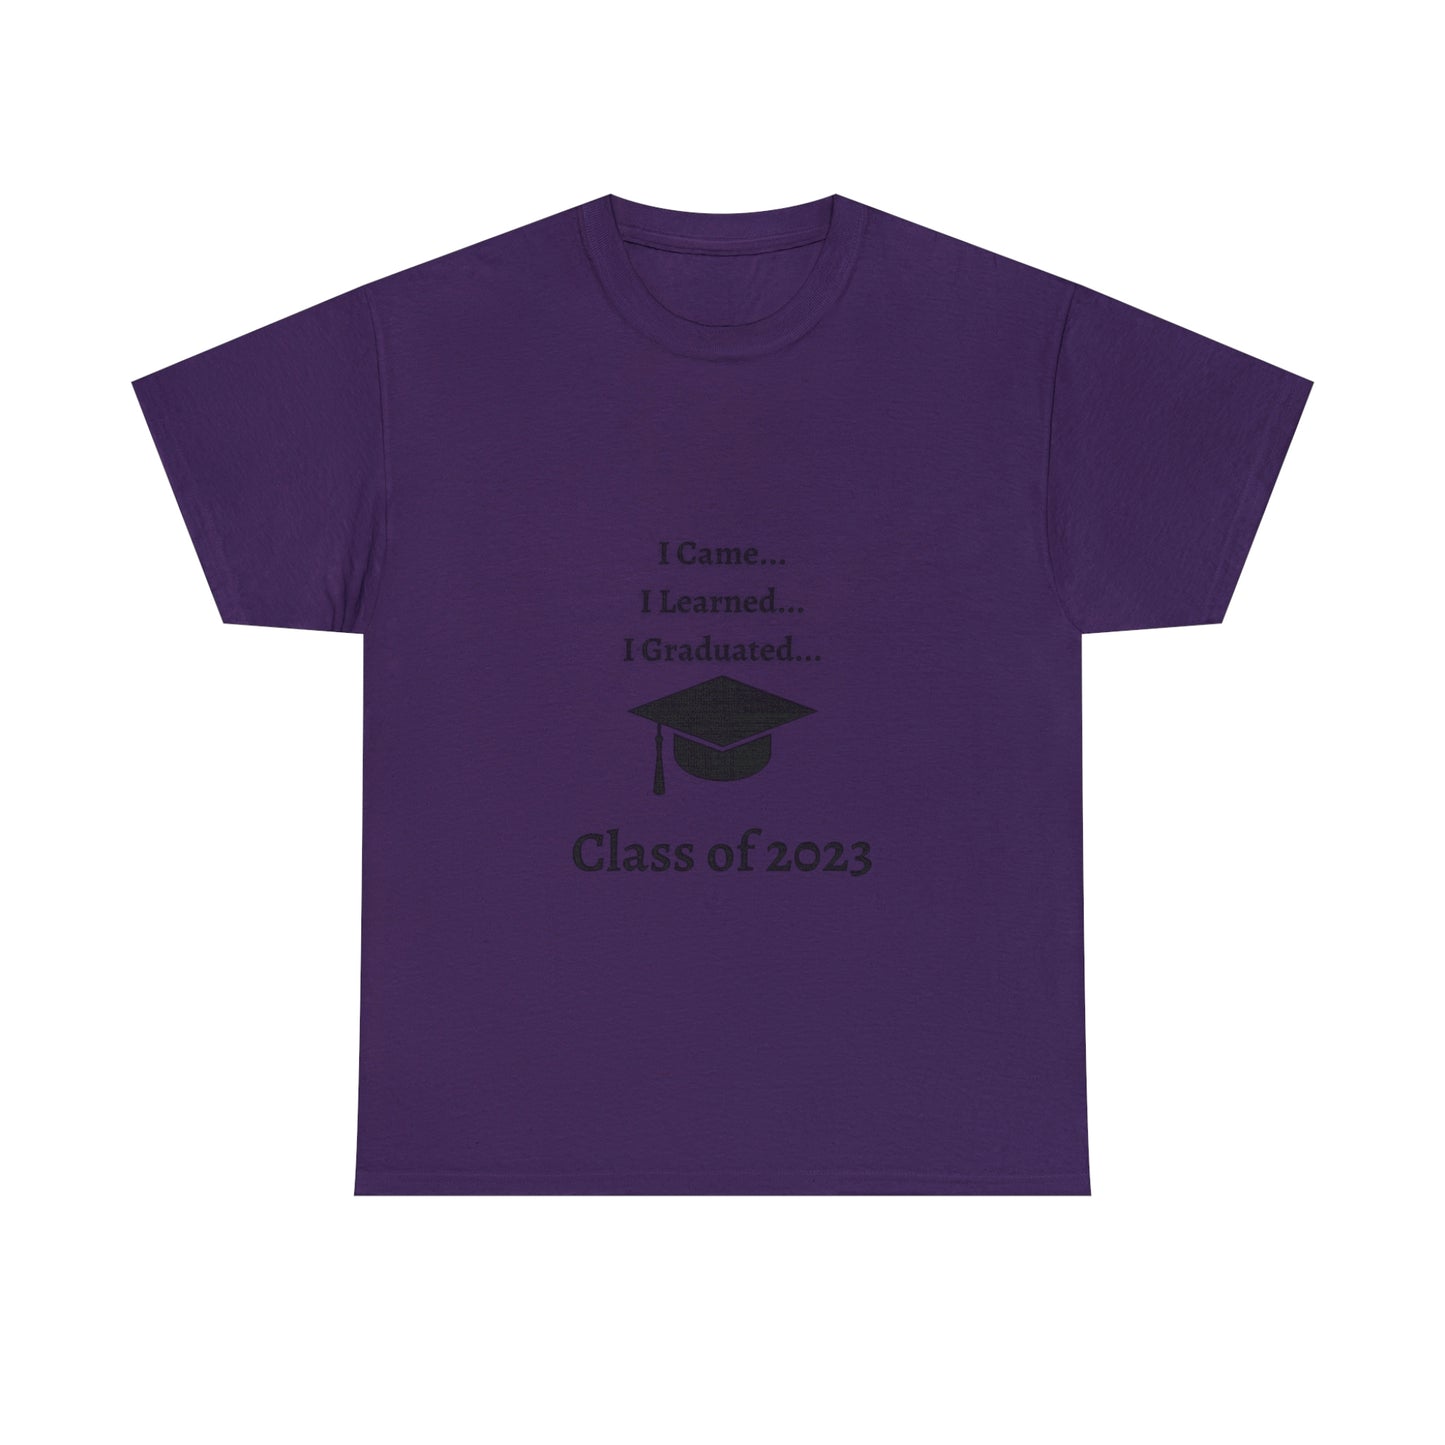 I Came, I Learned, I Graduated T-shirt 2023 Graduation T-shirt